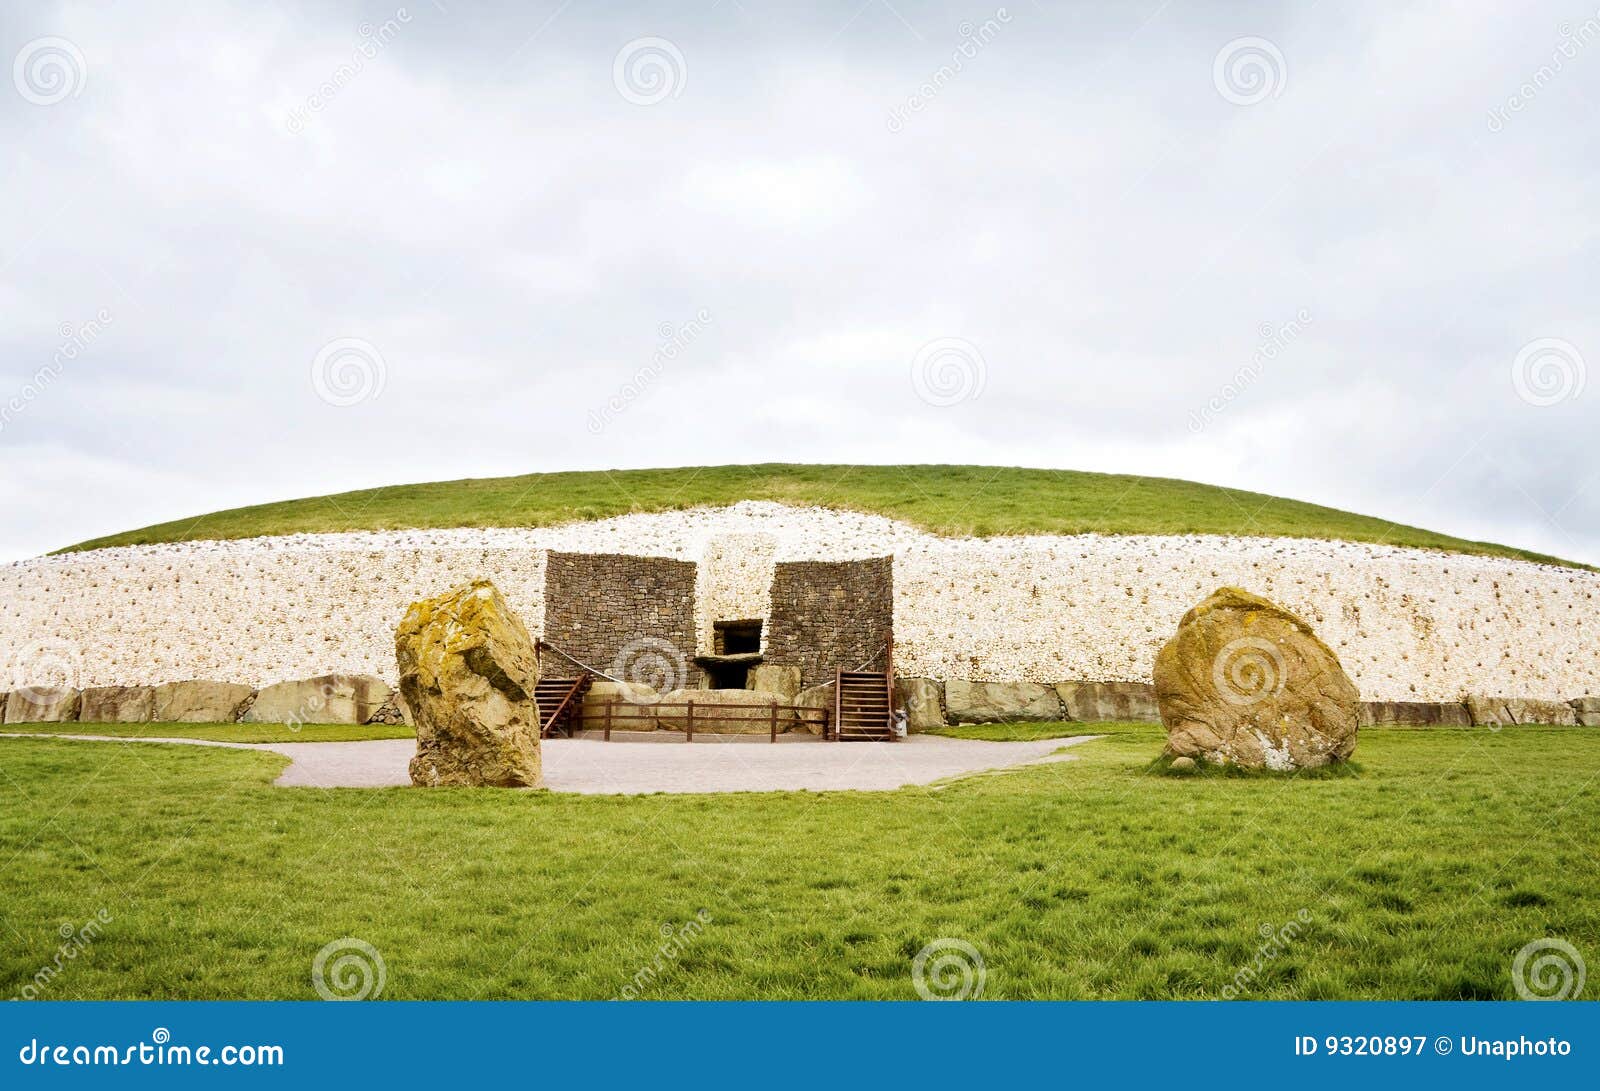 unesco world heritage - newgrange, ireland